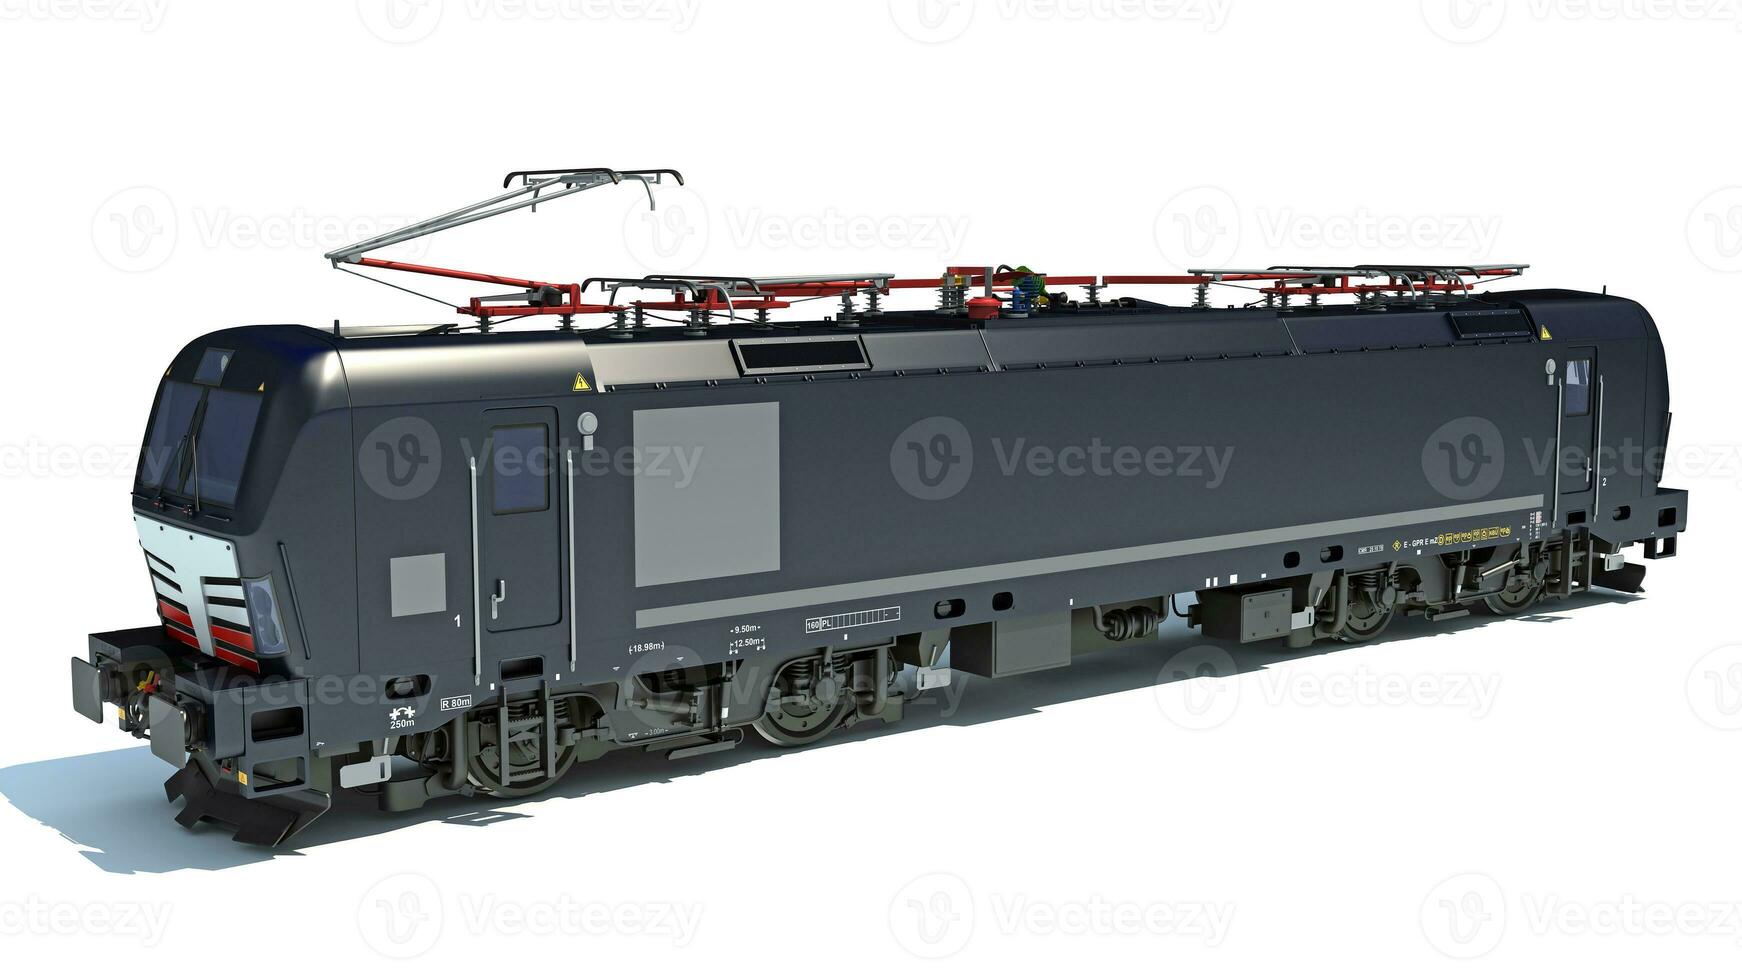 Locomotive Train 3D rendering on white background photo